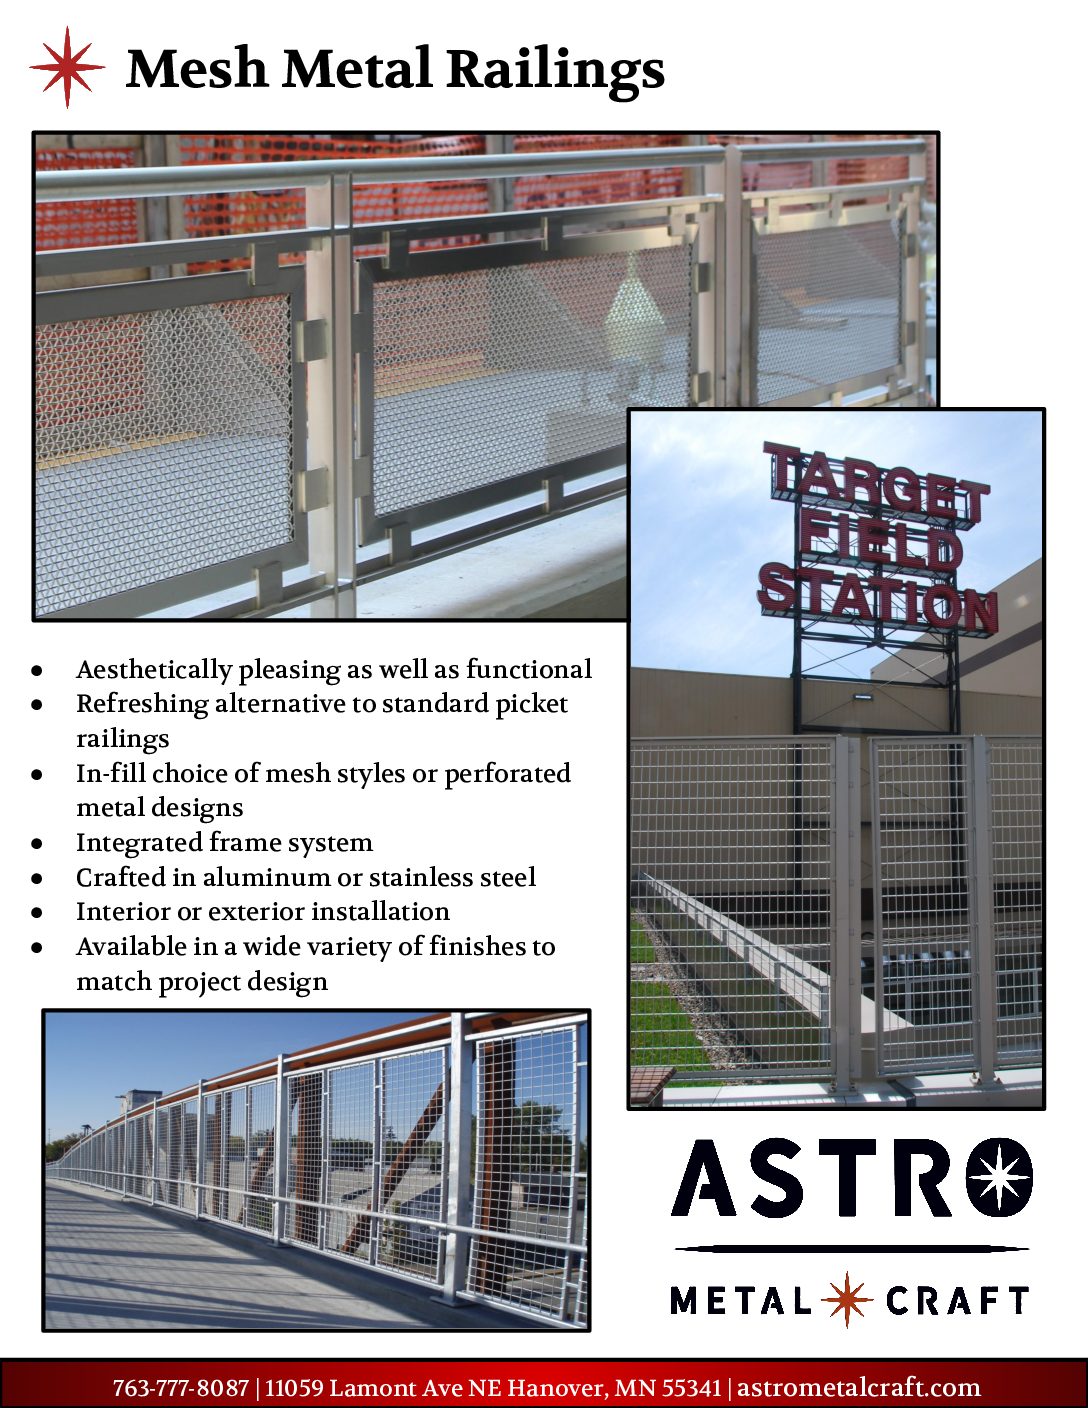 Astro Metal Craft – Mesh Metal Railings Line Card